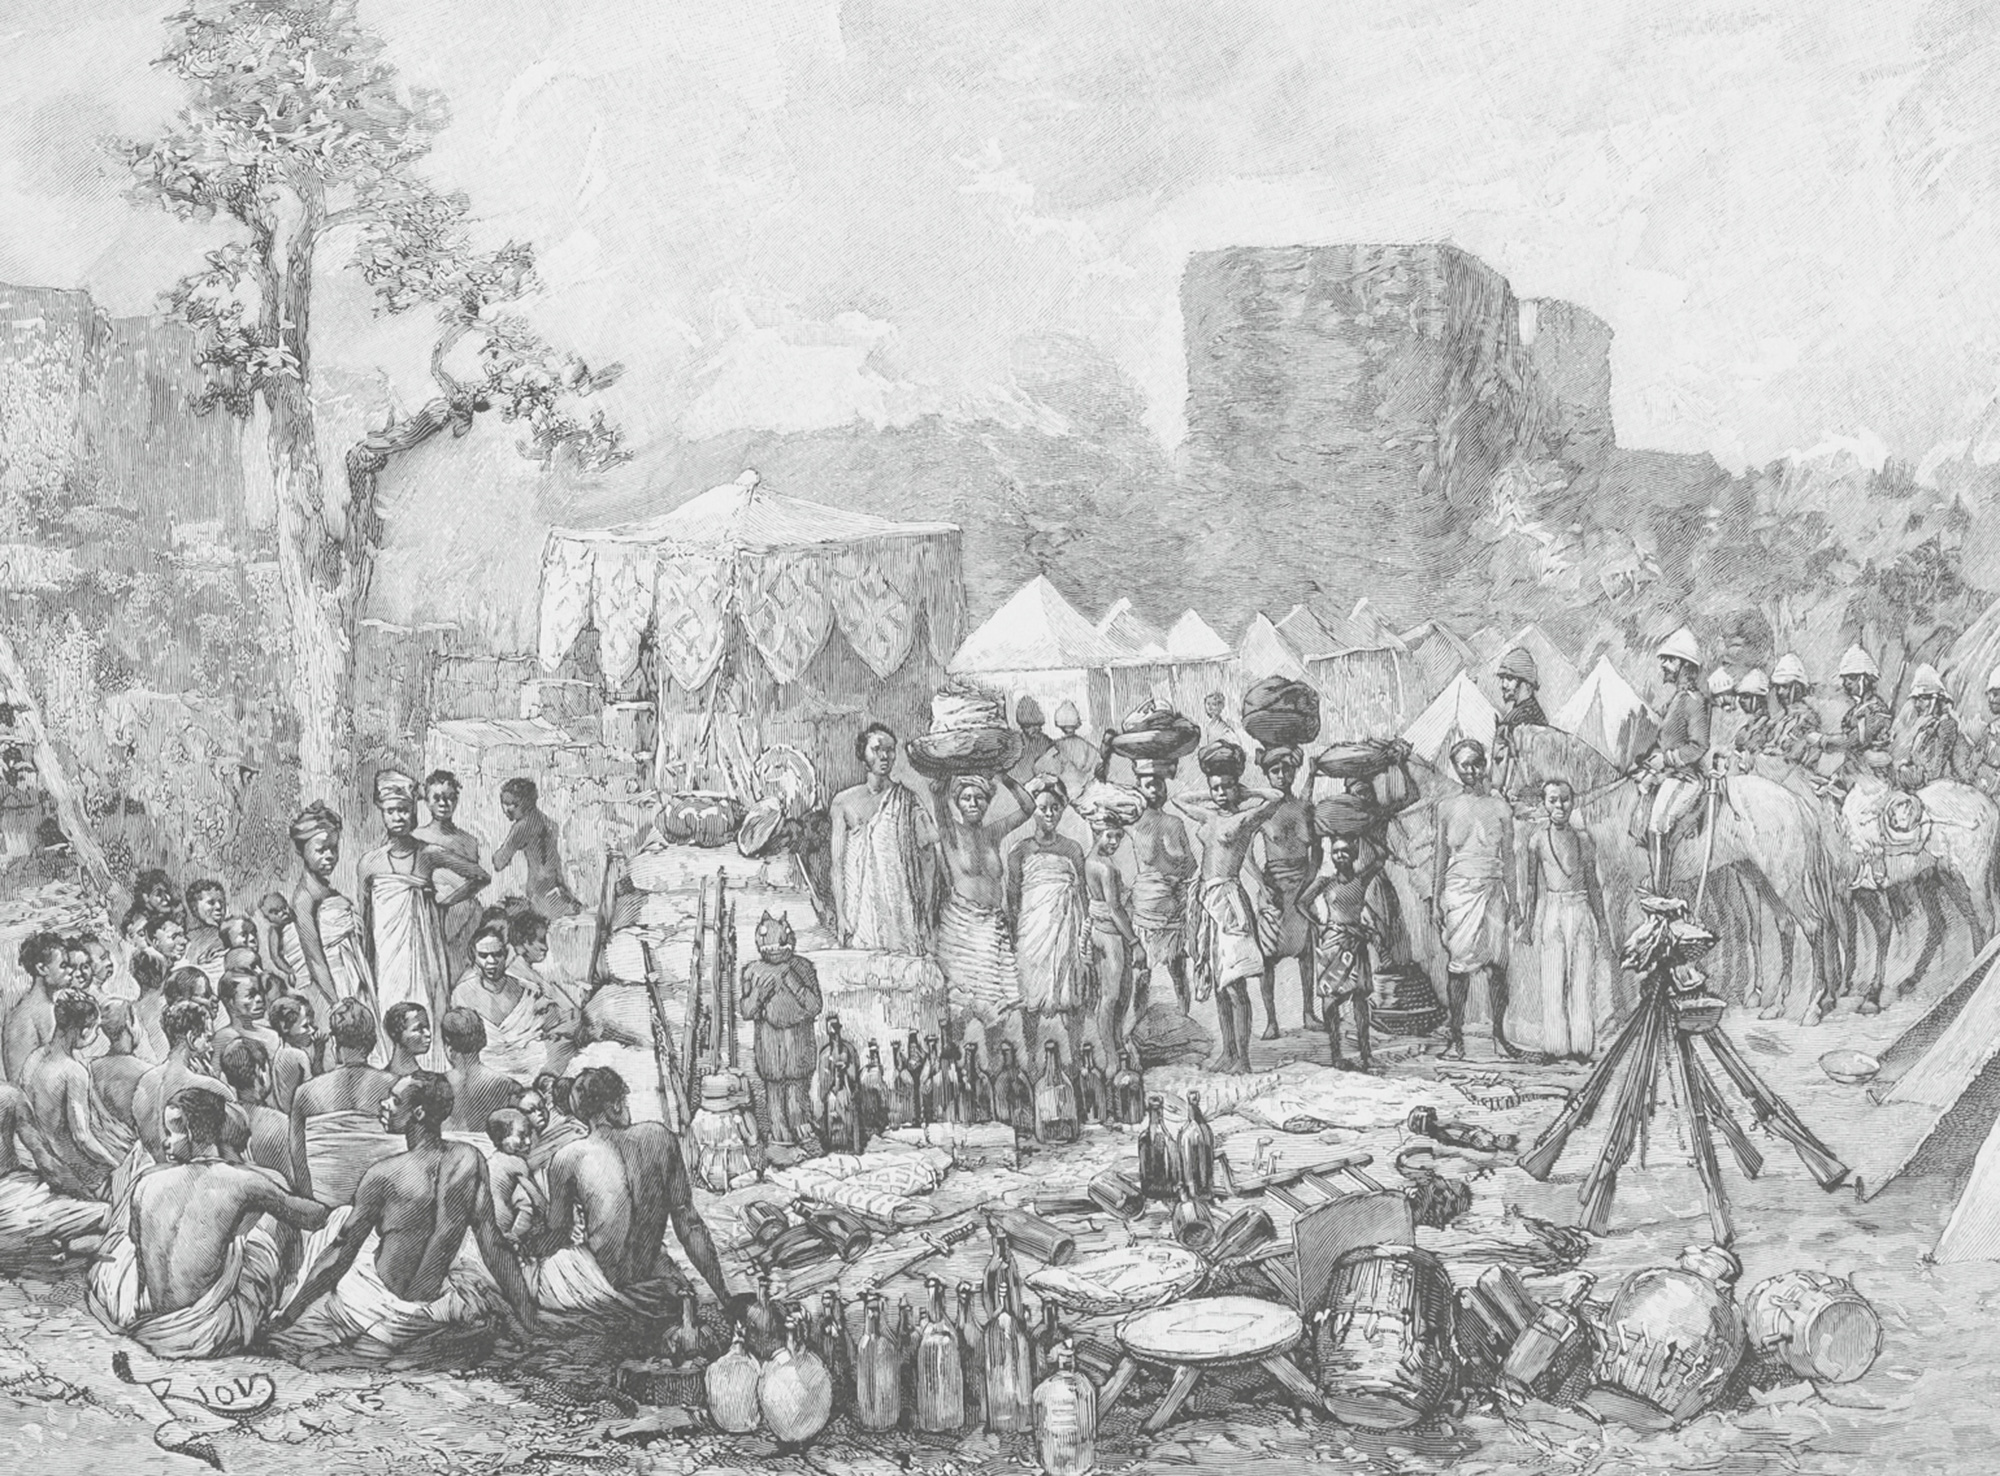 General Dodd’s camp at Place Goho in Abomey. Illustration in Alexandre L. d’Albéca, La France au Dahomey, 1895.